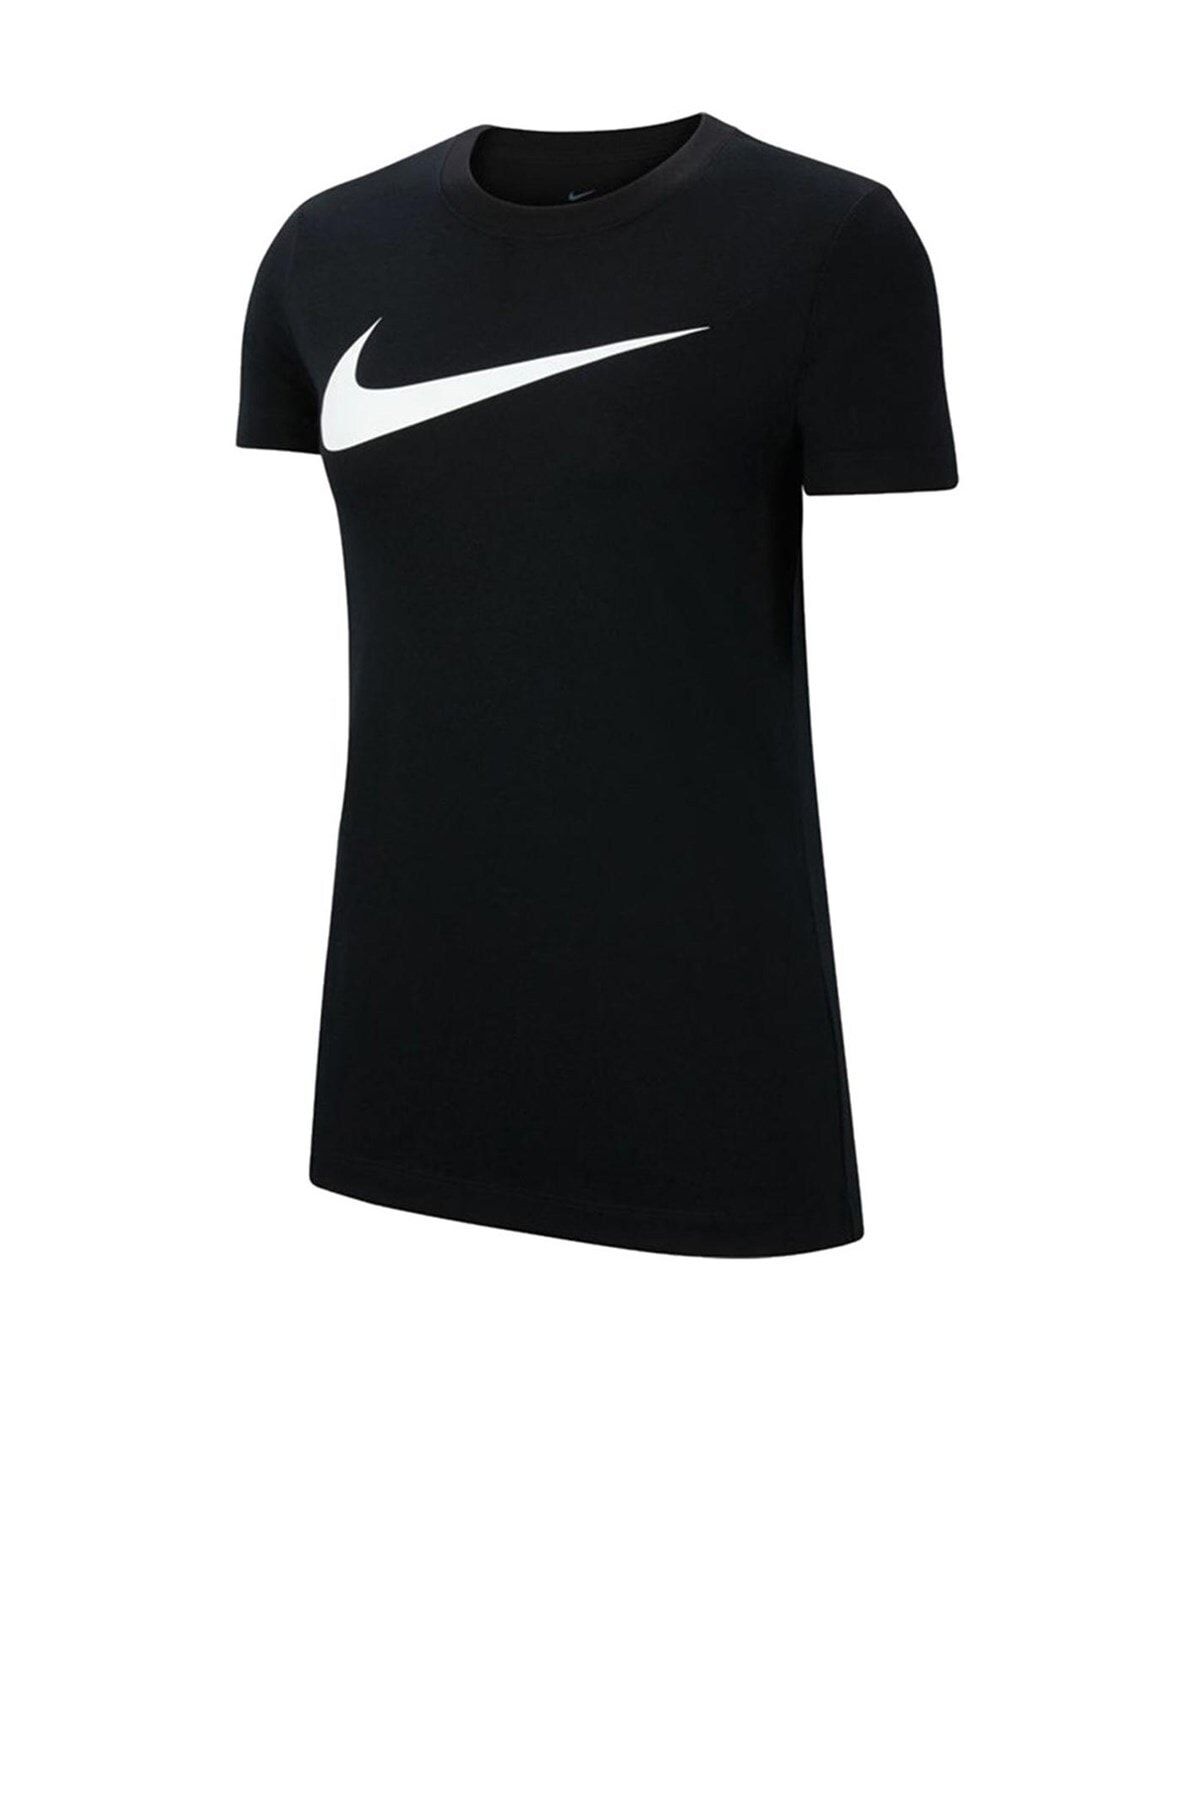 Nike Dri-fit Park Kadın Tişört Cw6967-010